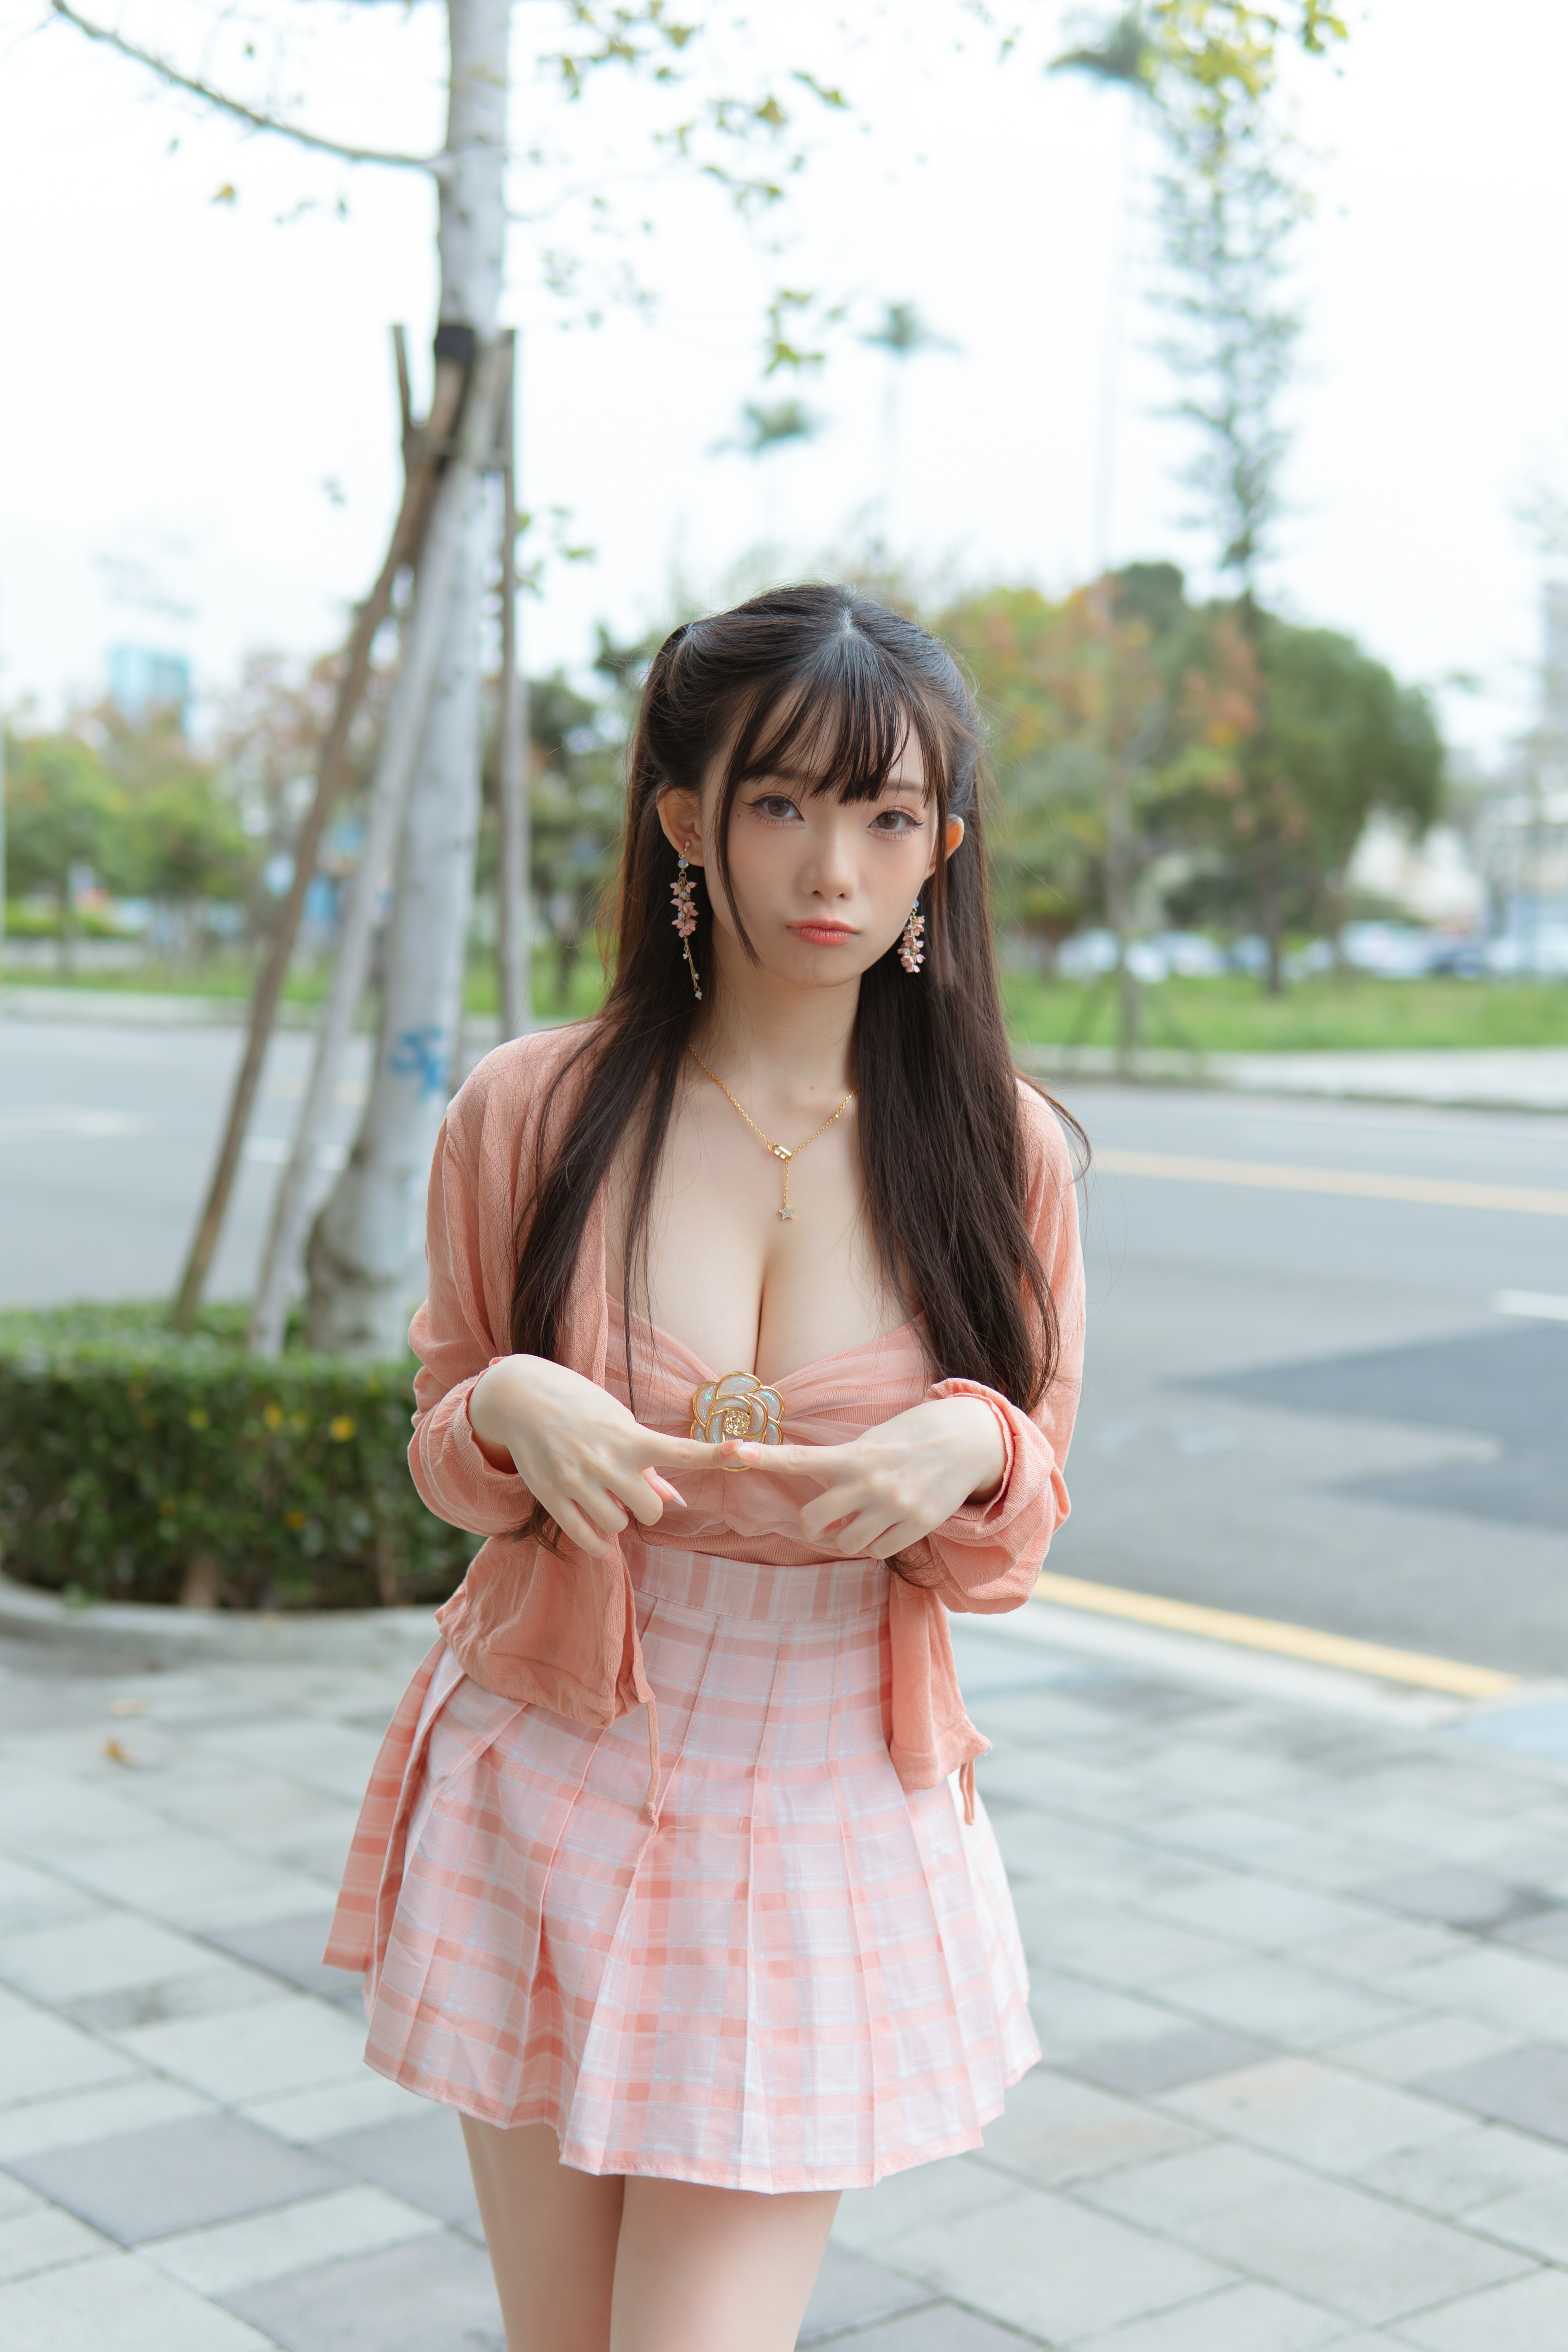 Ning Shioulin Women Model Asian Brunette Sweater Pink Tops Necklace 3858x5787